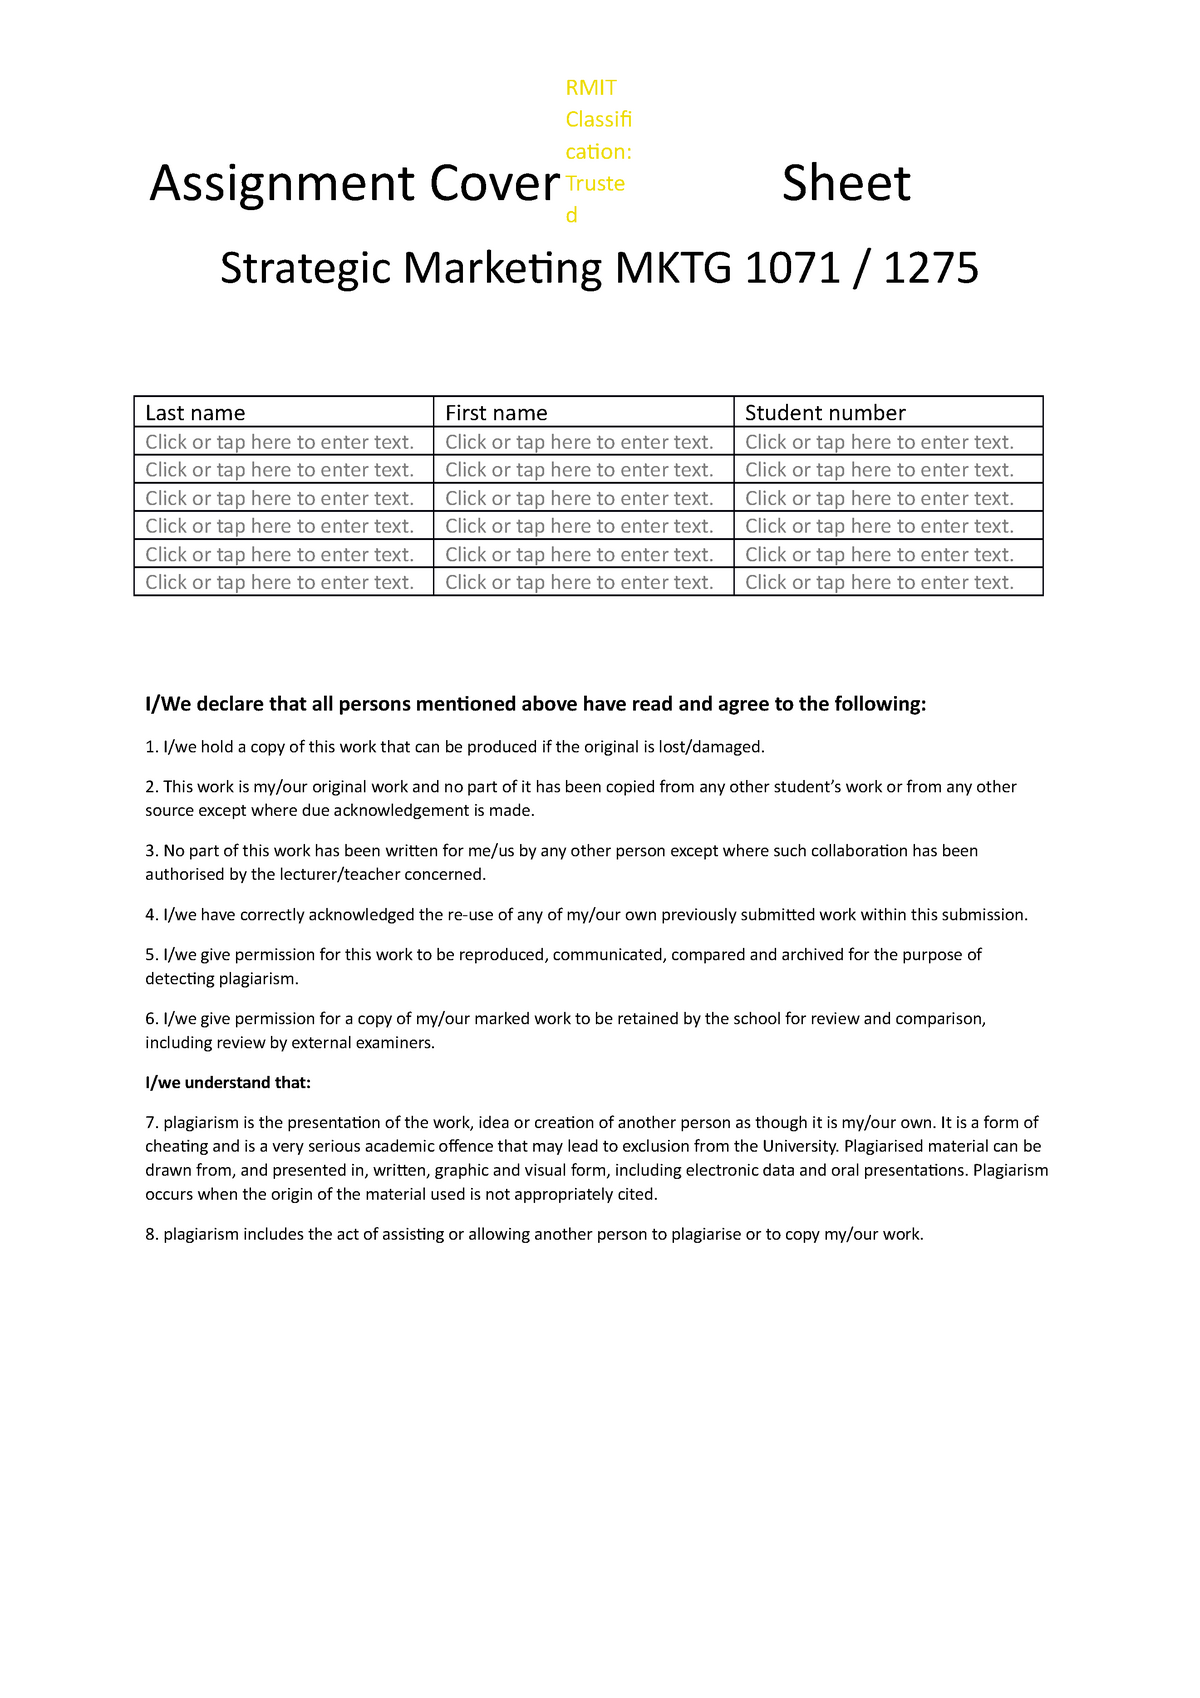 strategic marketing assignment 3